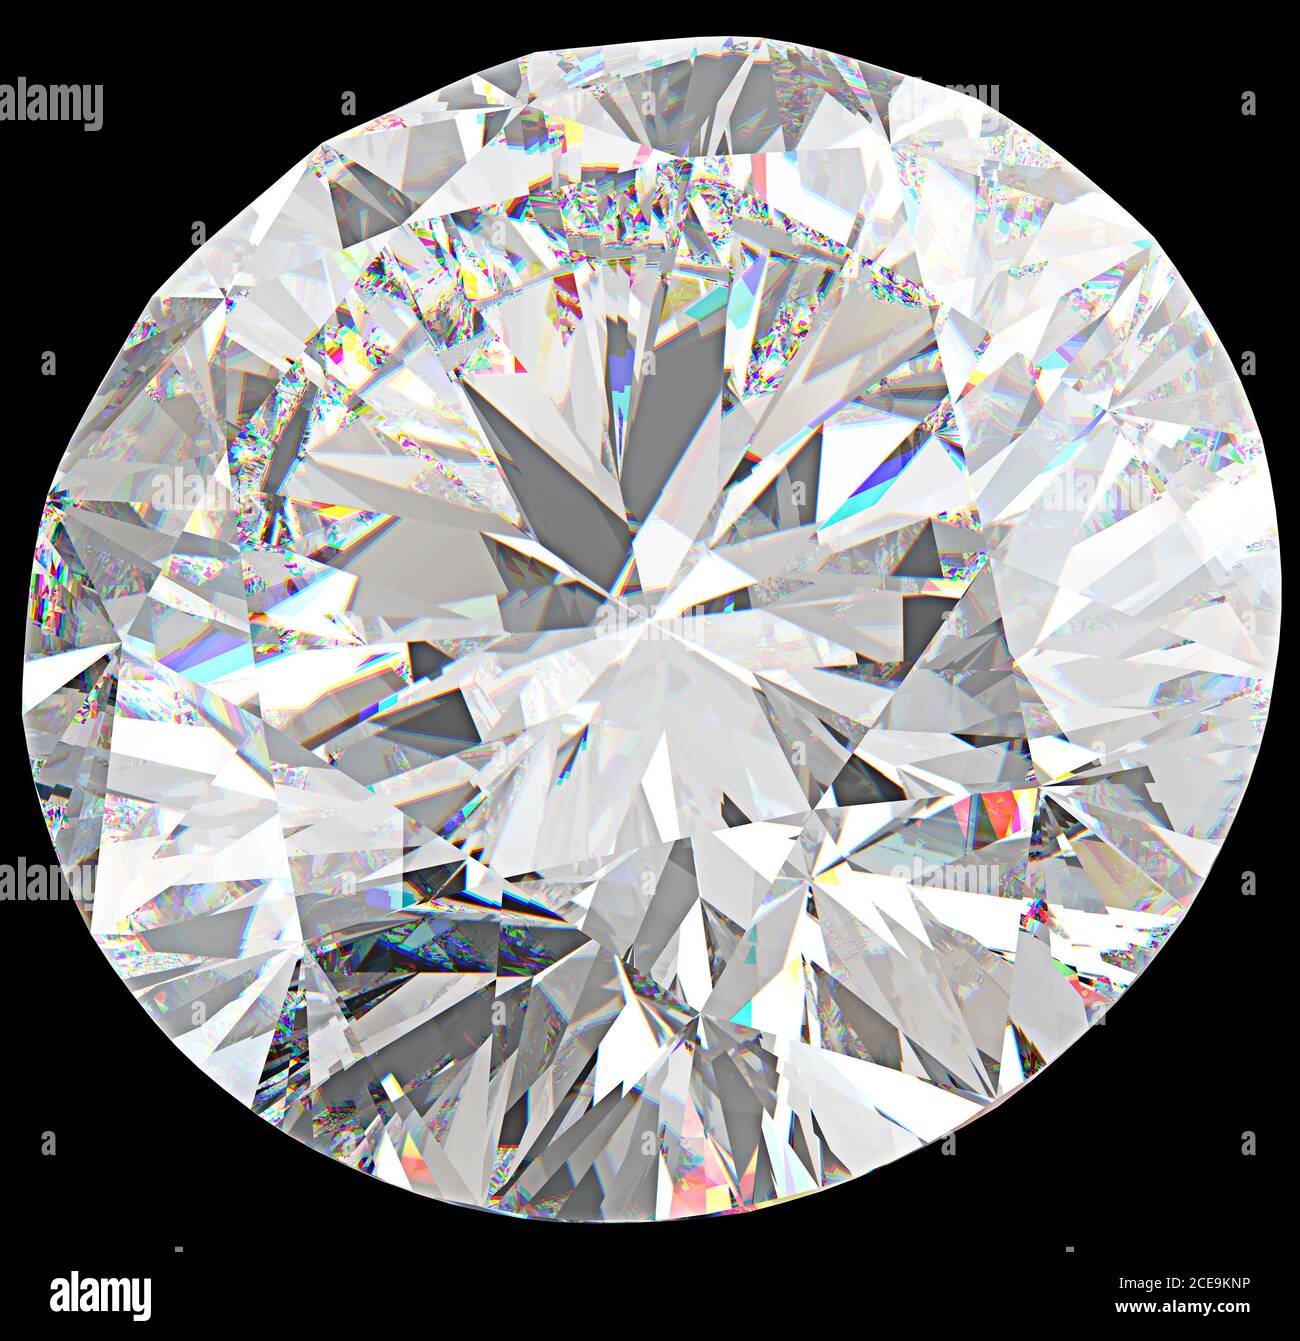 Diamante redondo grande fotografías e imágenes de alta resolución - Alamy